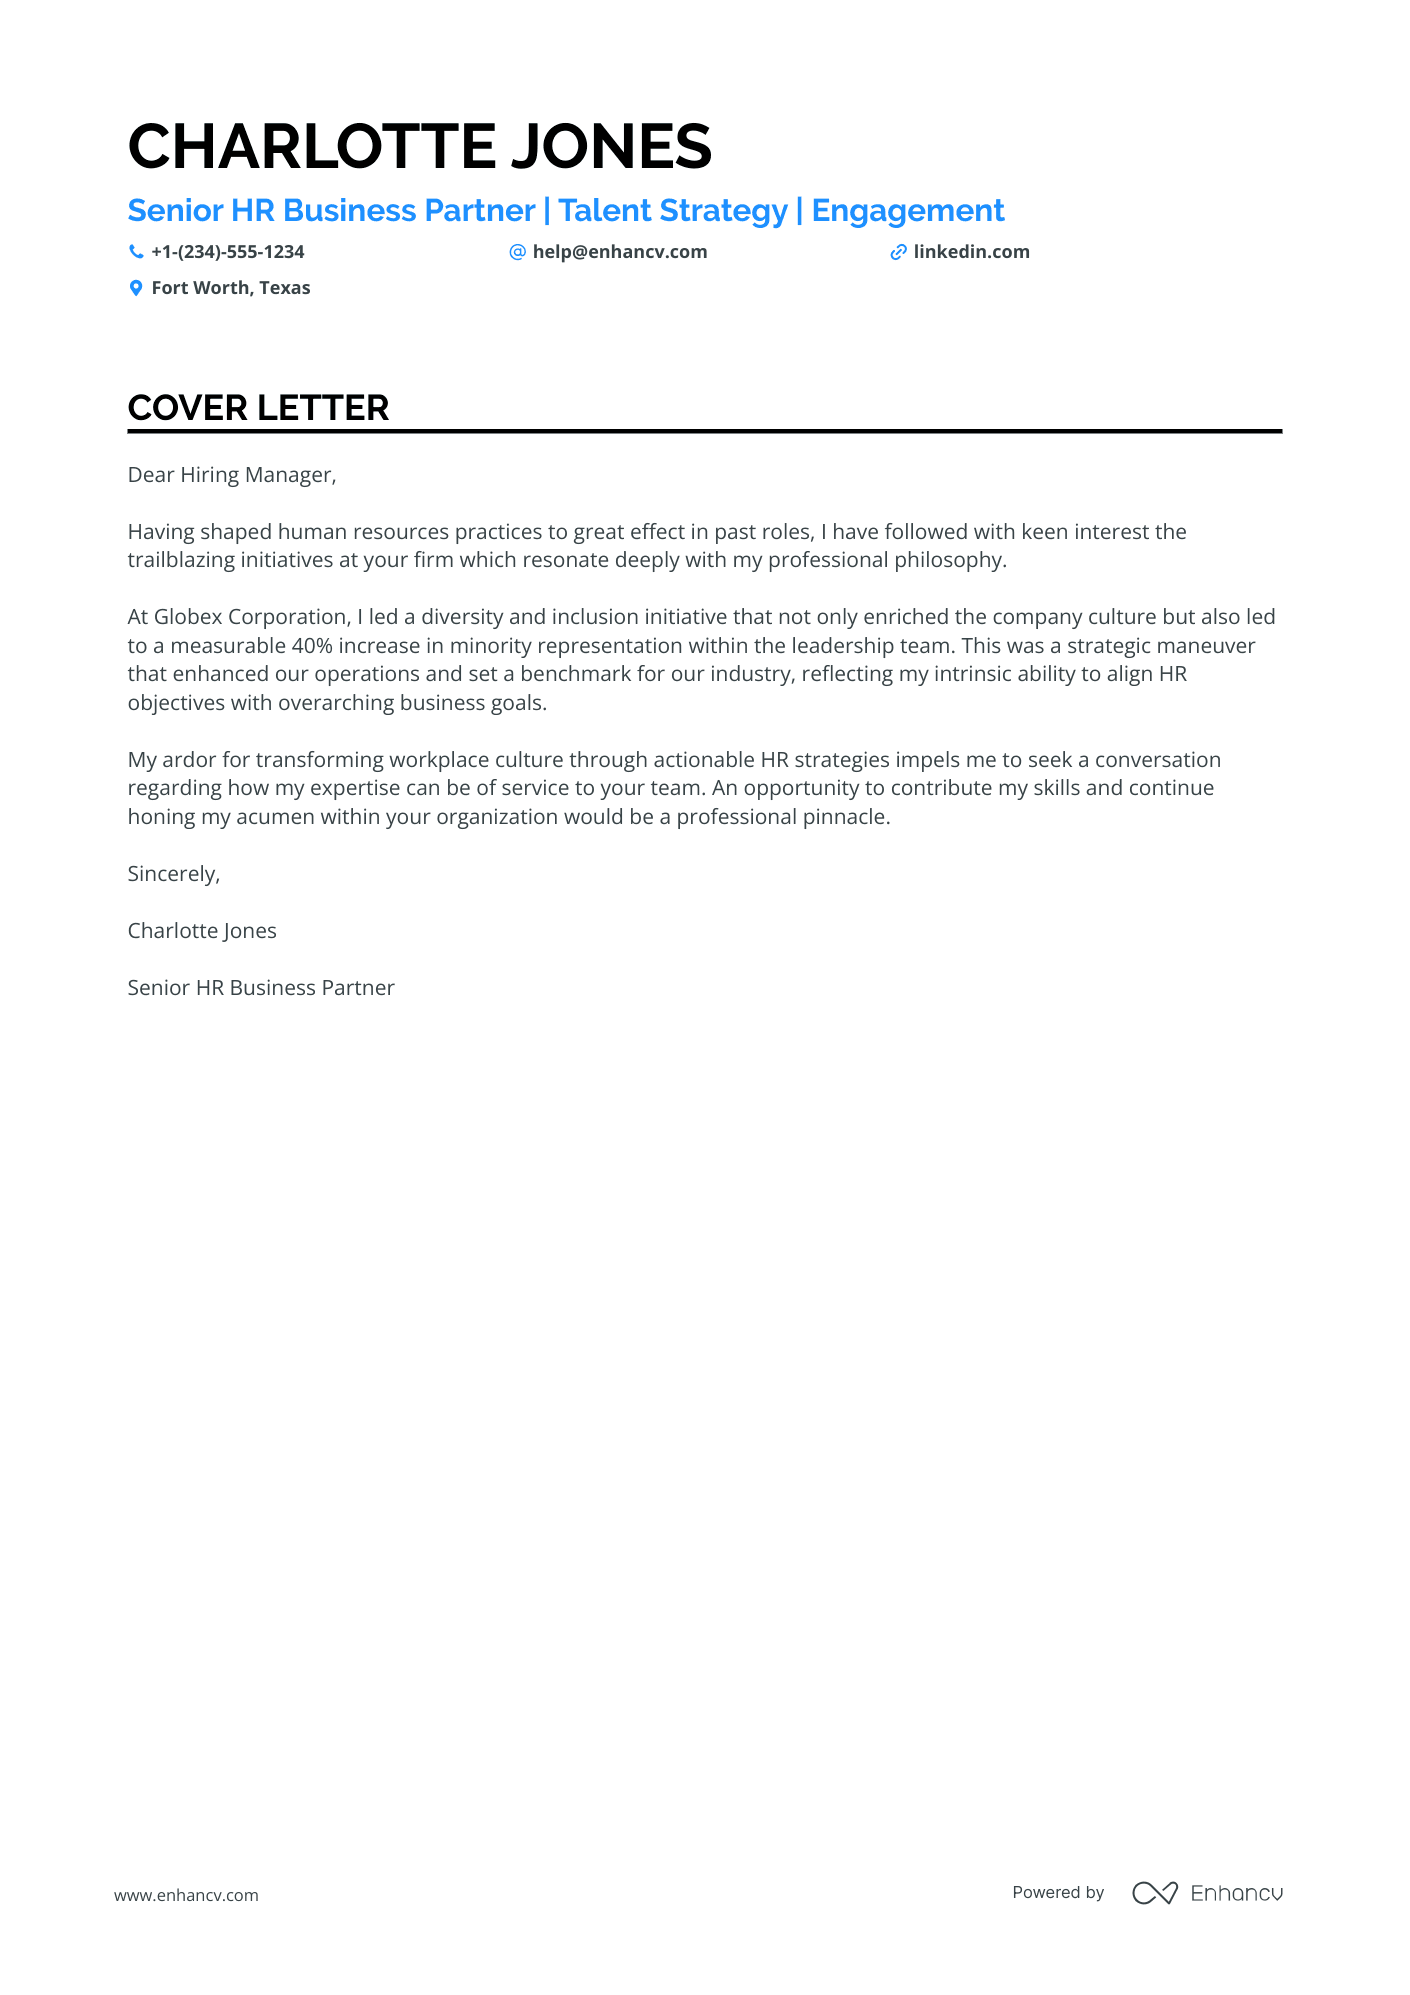 HR cover letter